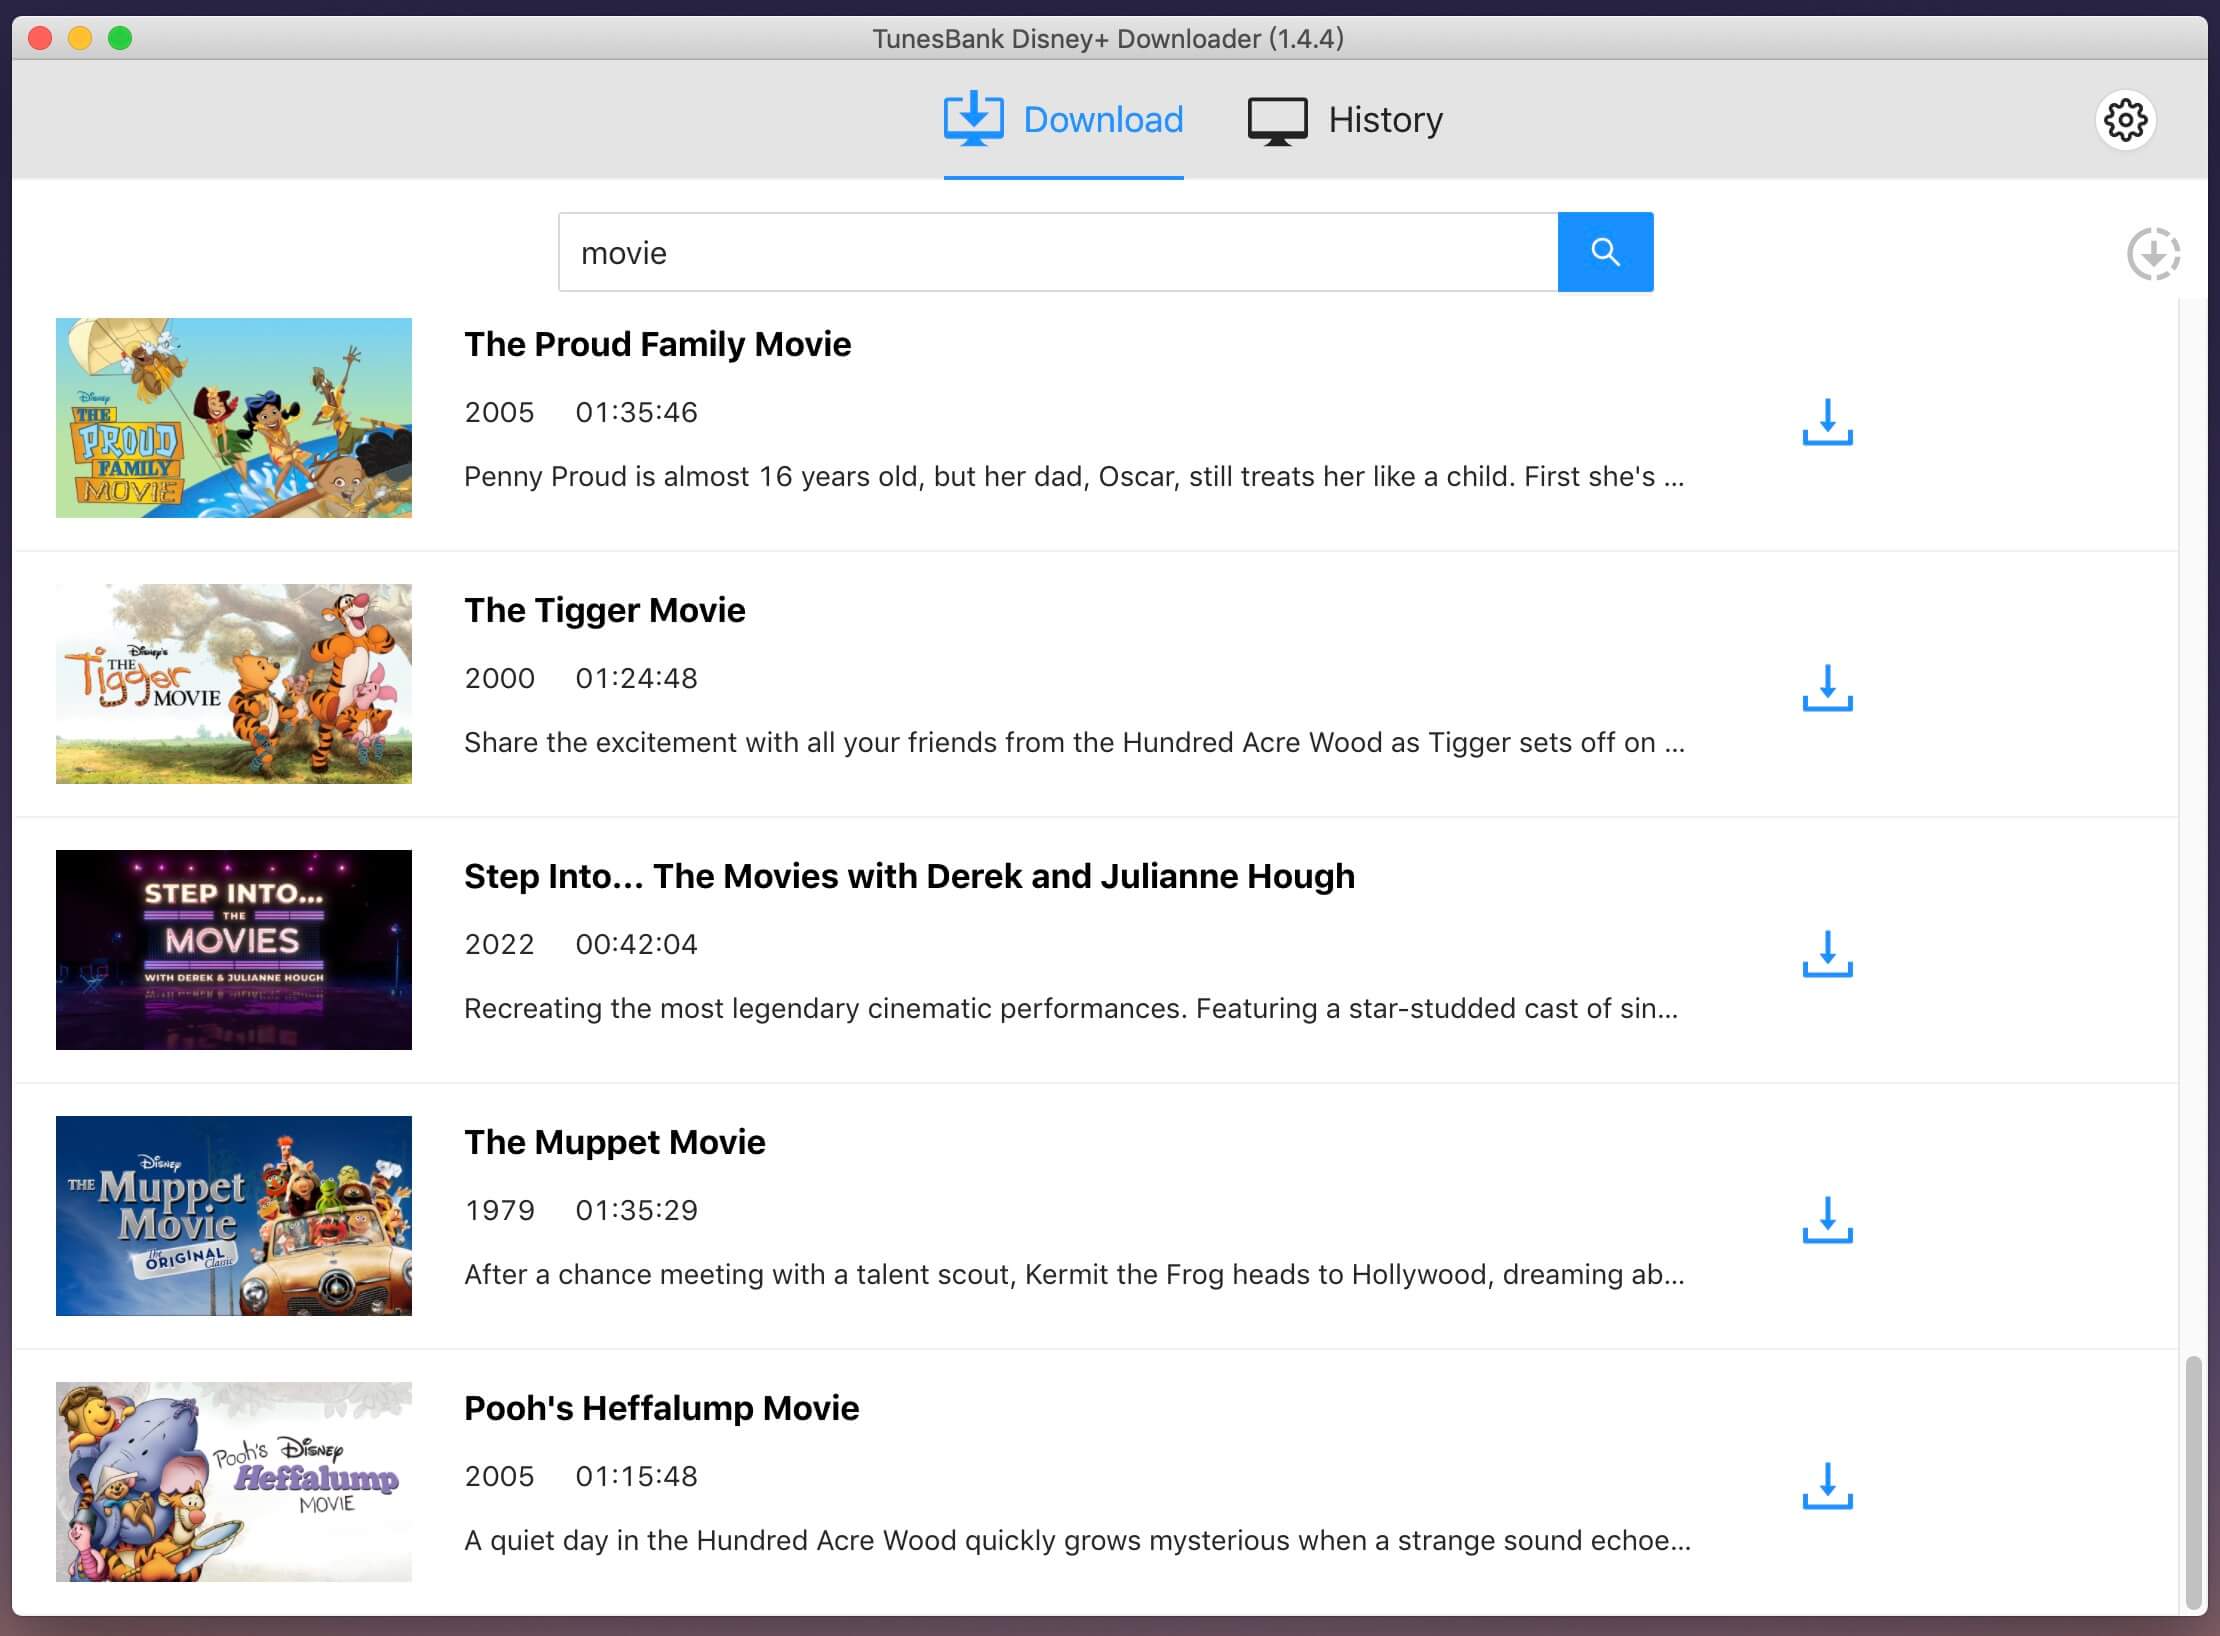 TunesBank Disney Video Downloader search Disney plus video